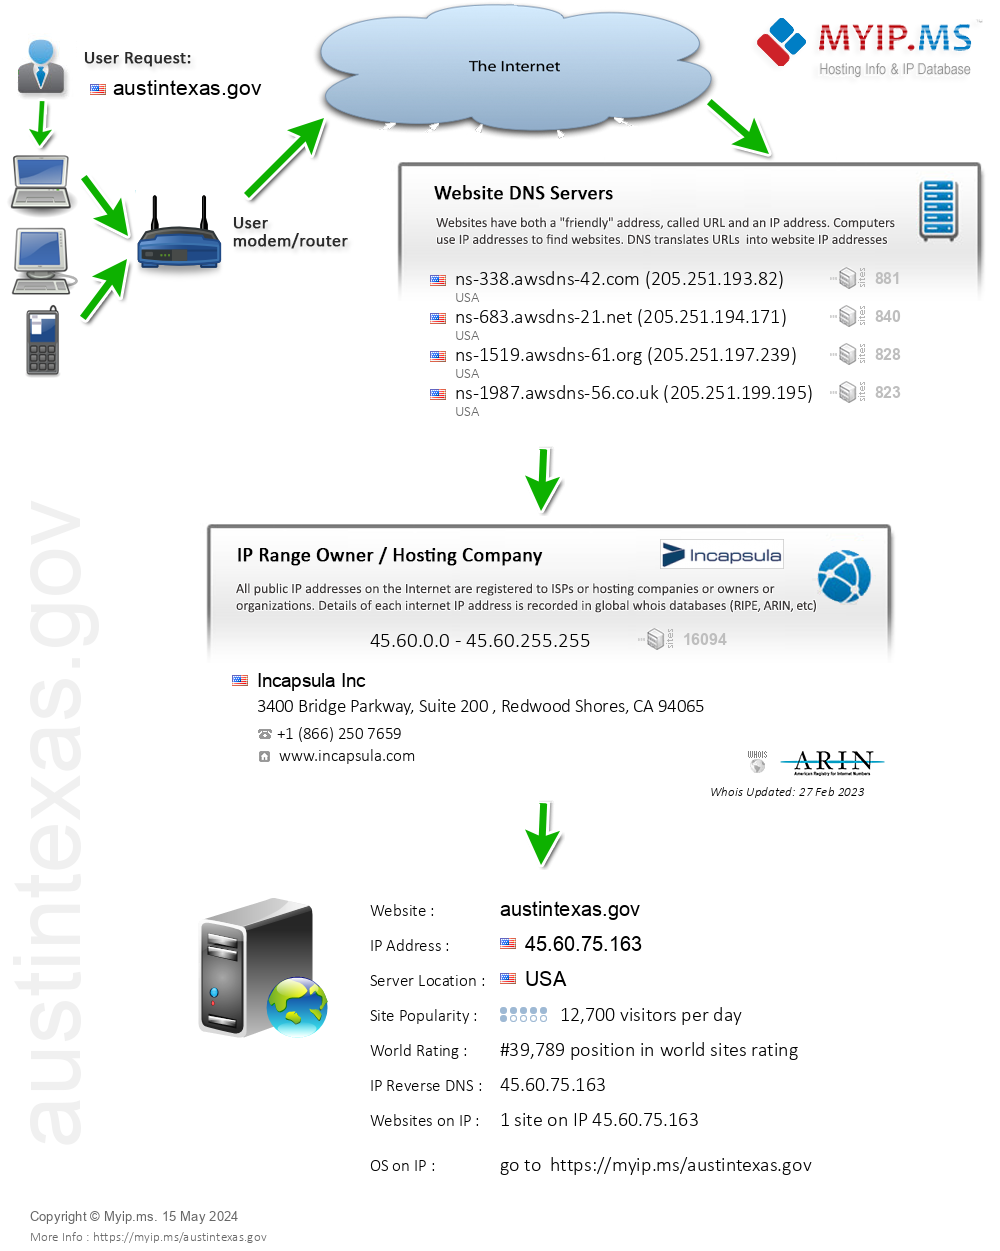 Austintexas.gov - Website Hosting Visual IP Diagram